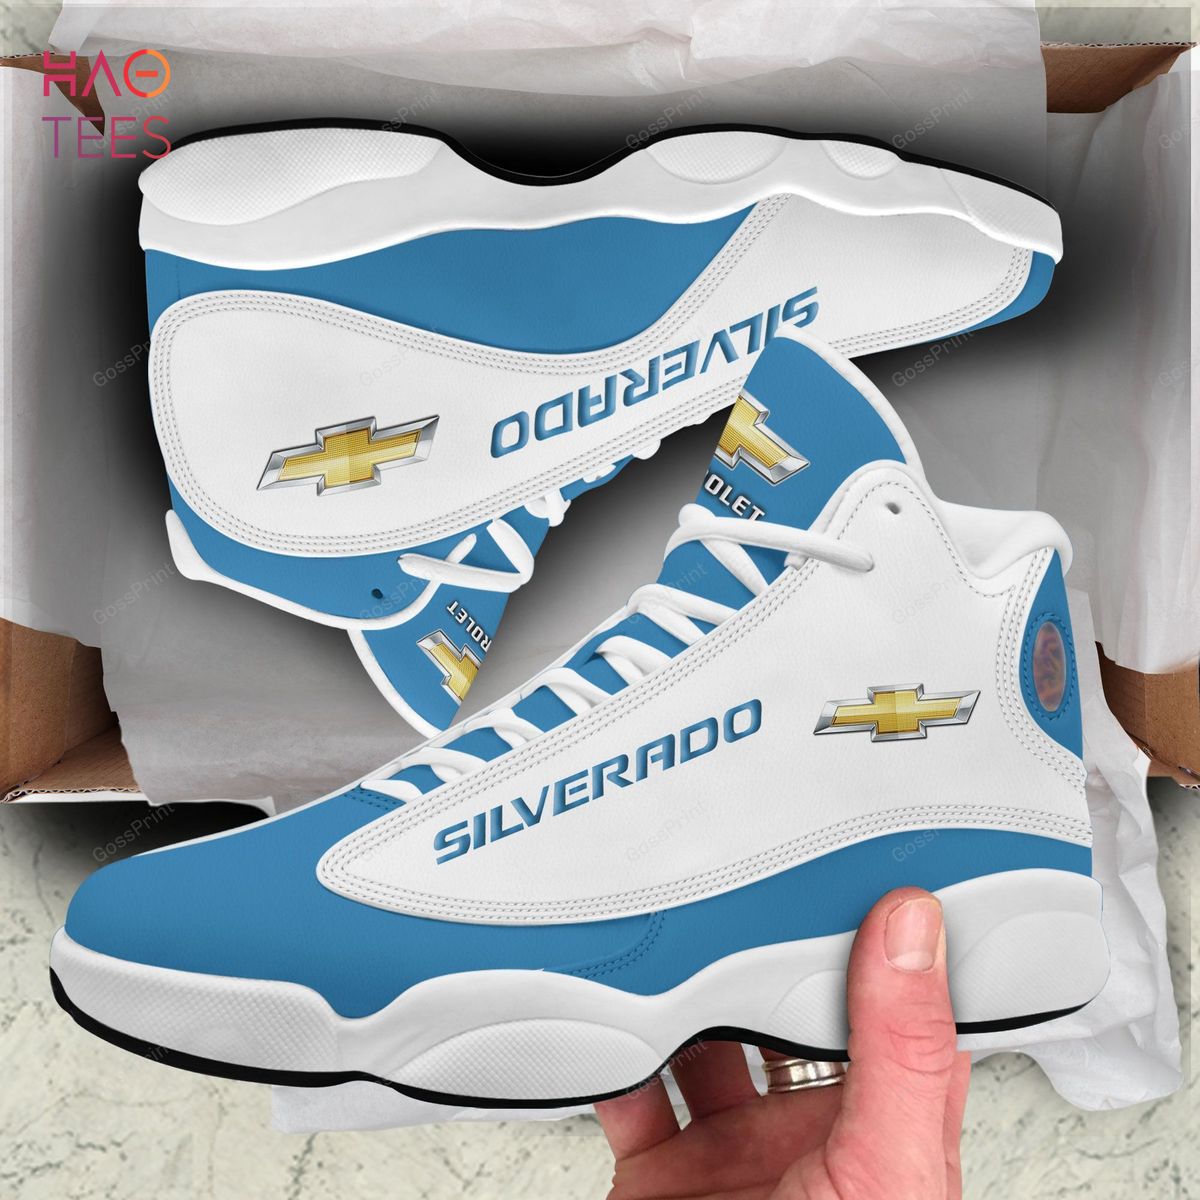 BEST Chevrolet Silverado Air Jordan 13 Blue White Shoes, Sneaker All Over Printed